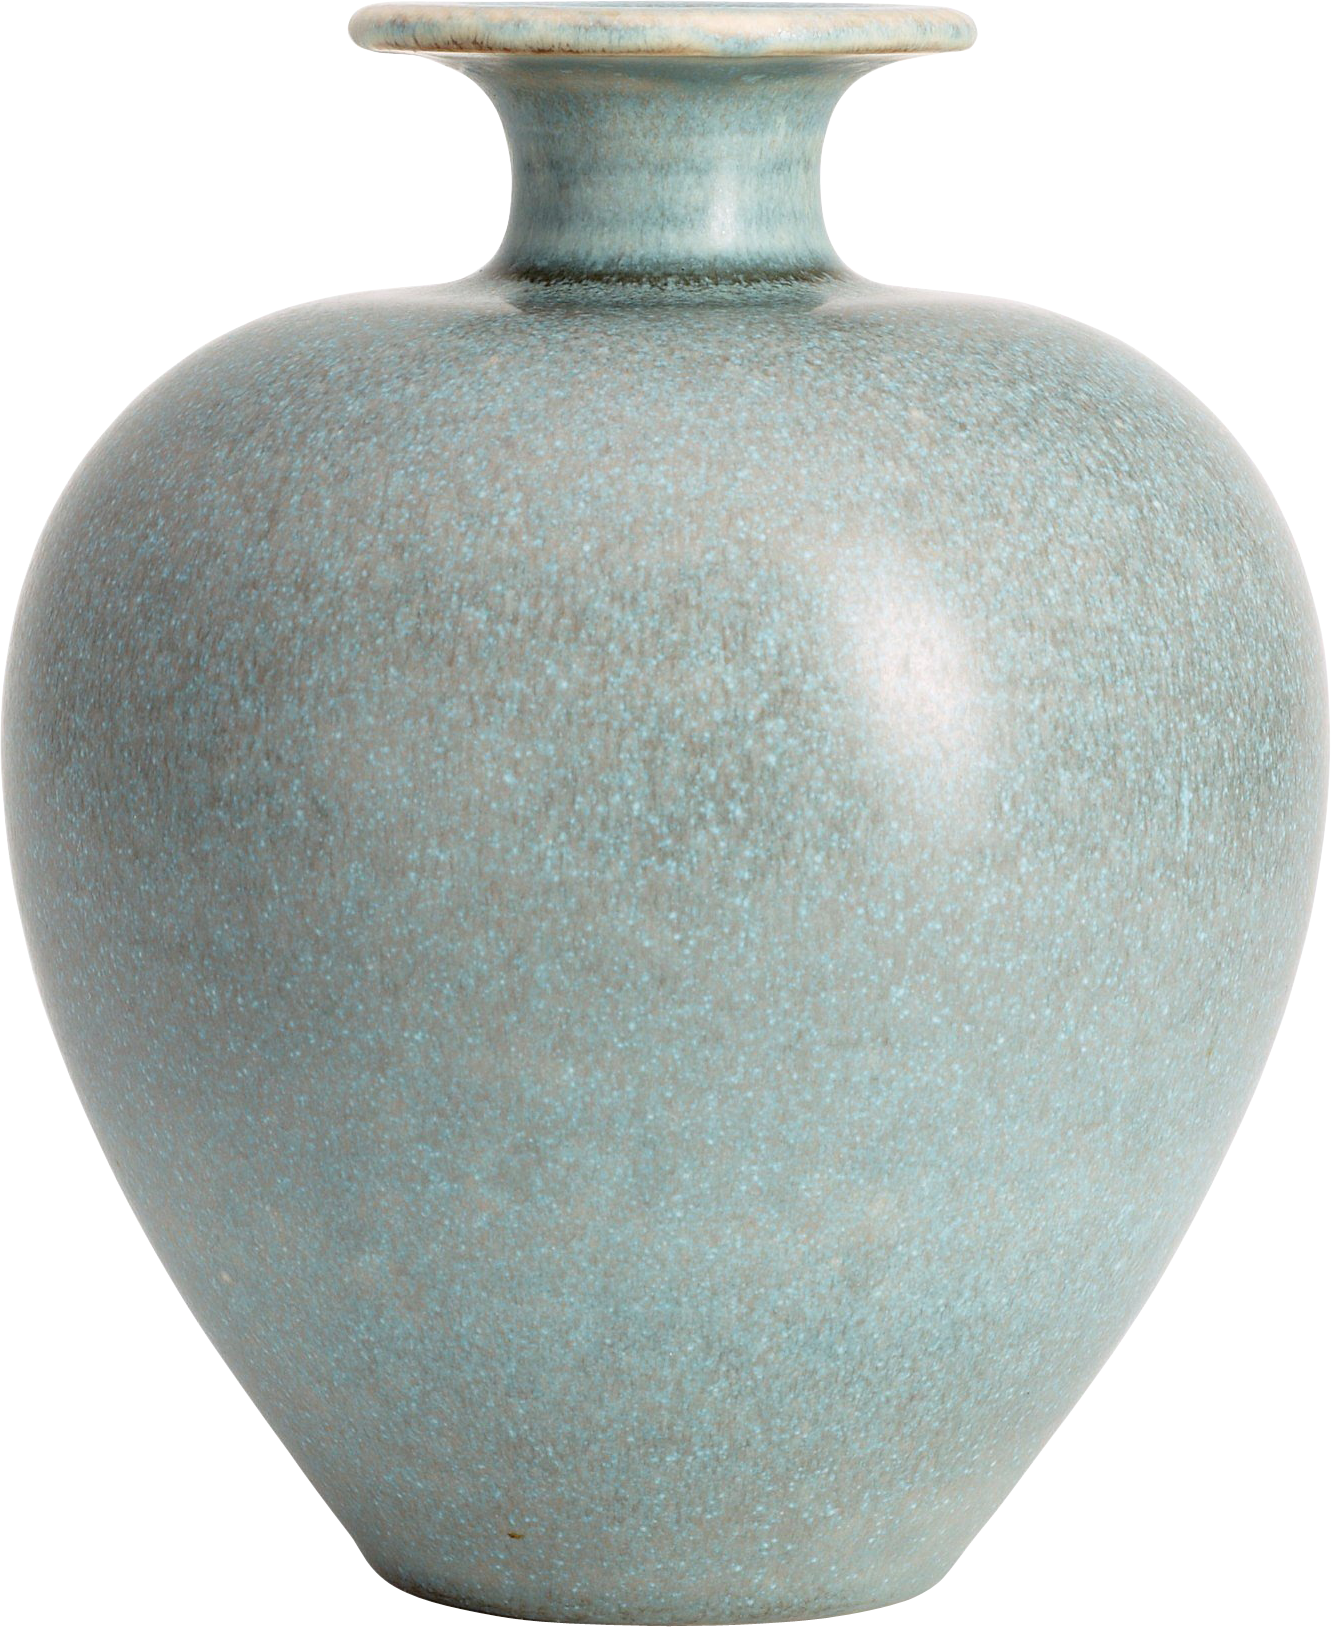 Leeres Vase-PNG-Bild mit transparentem Hintergrund